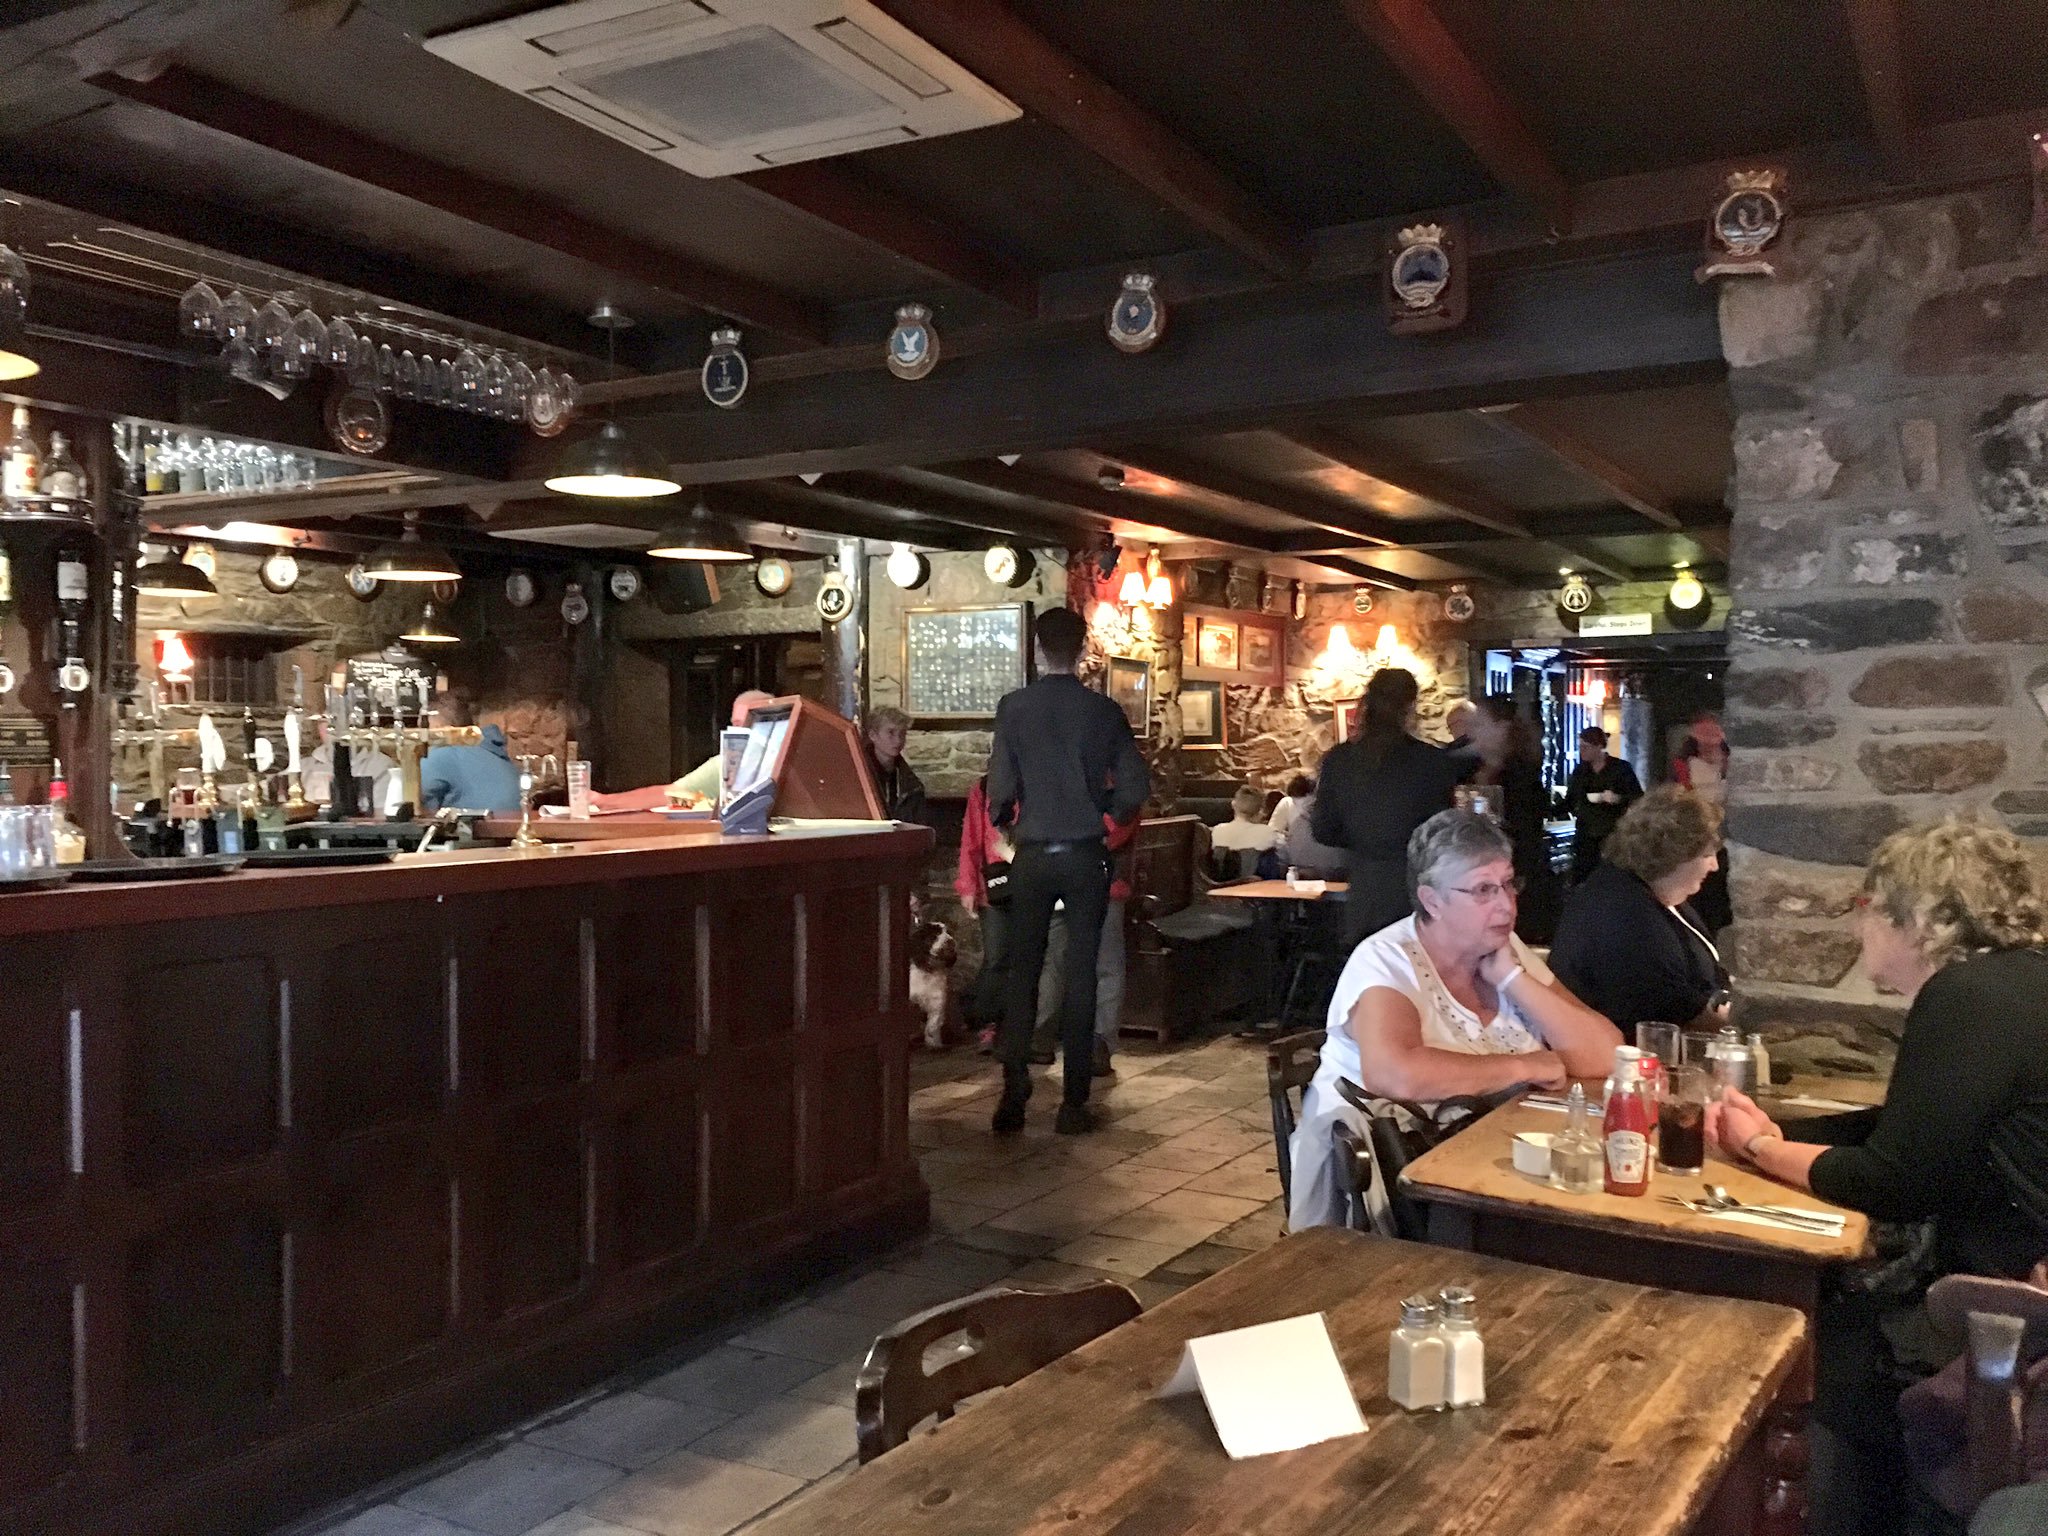 George Hotel bar/resto, Inverary. https://t.co/54WPHwfGyZ